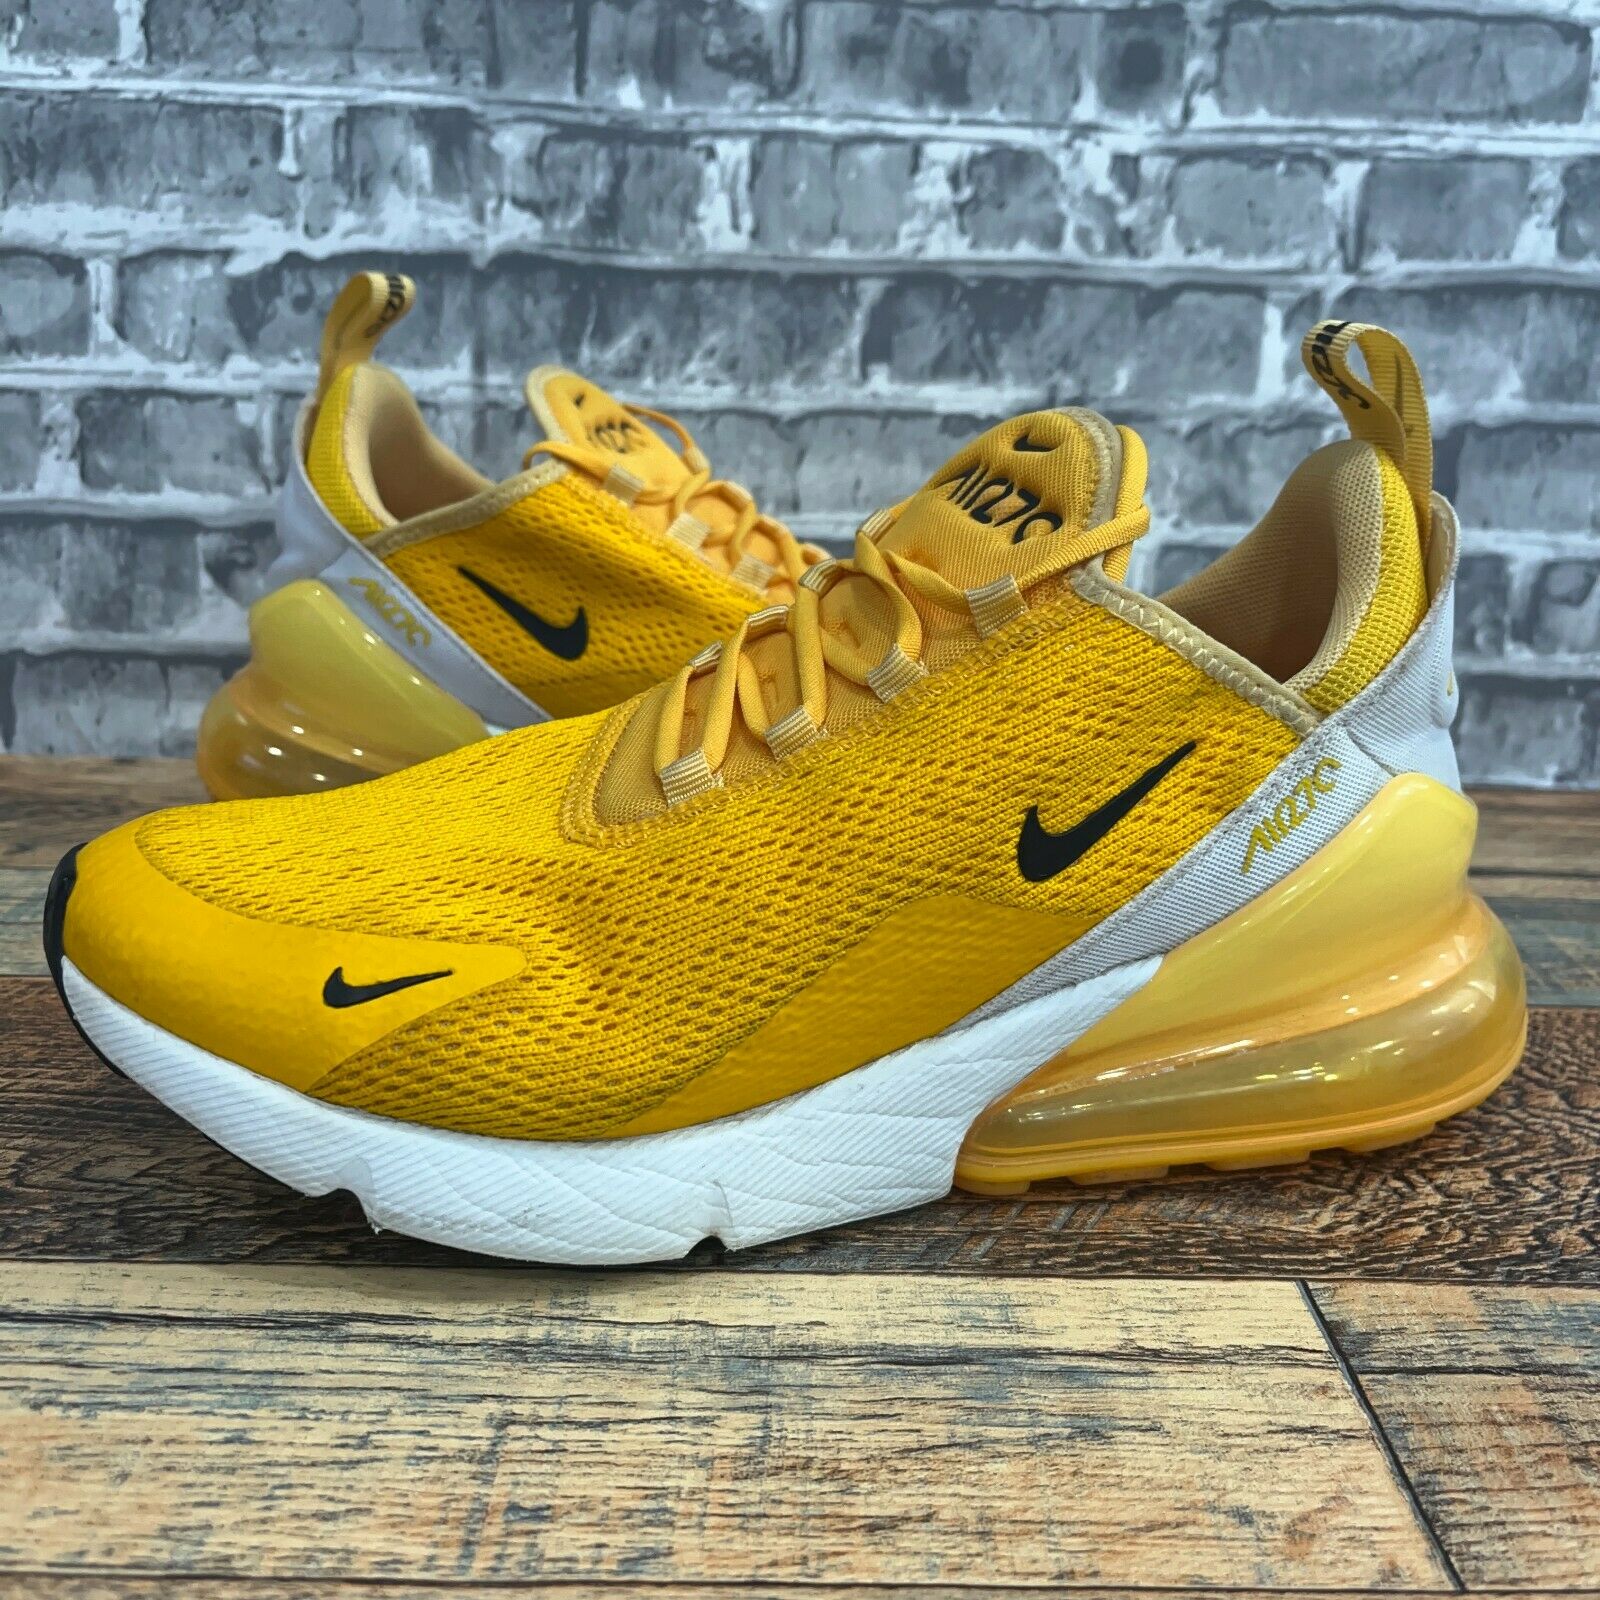 Nike Air Max 270 University Gold Yellow White Running Shoes Womens Size 8 Rare